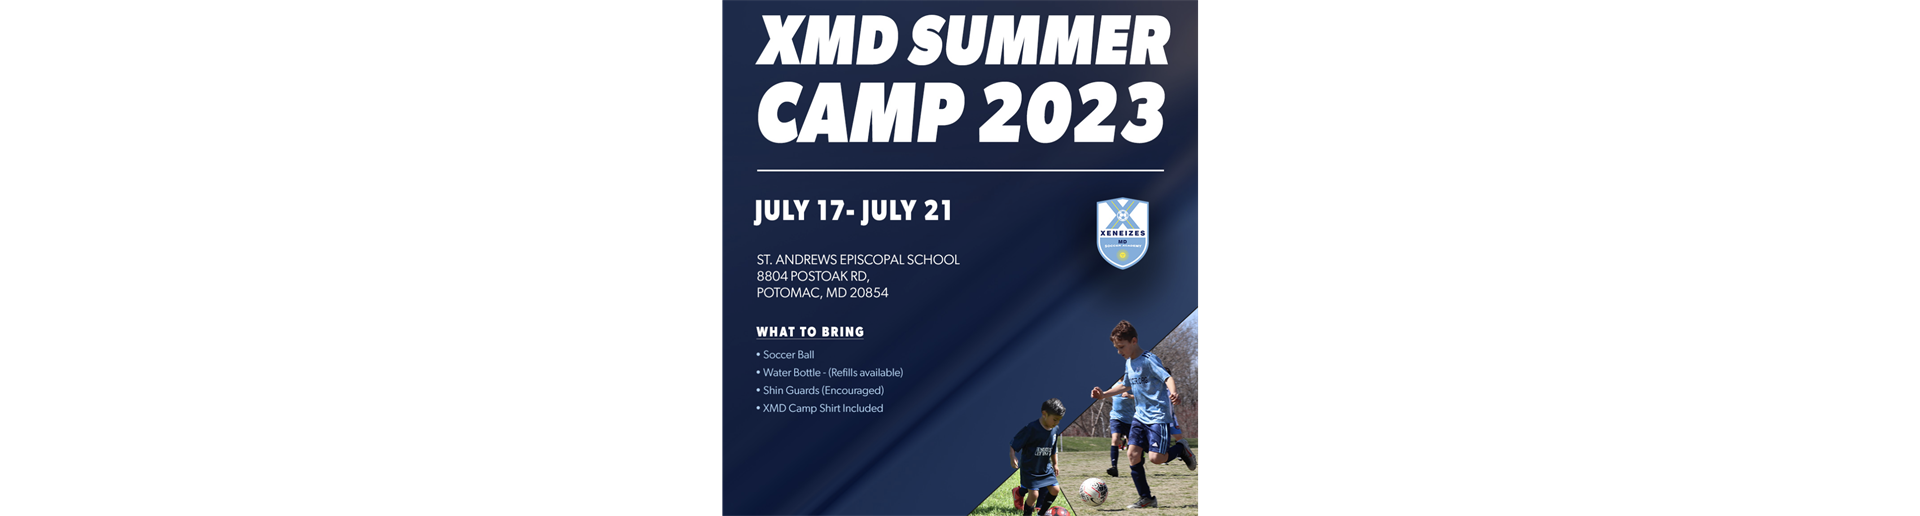 XMD Summer Camp 2023